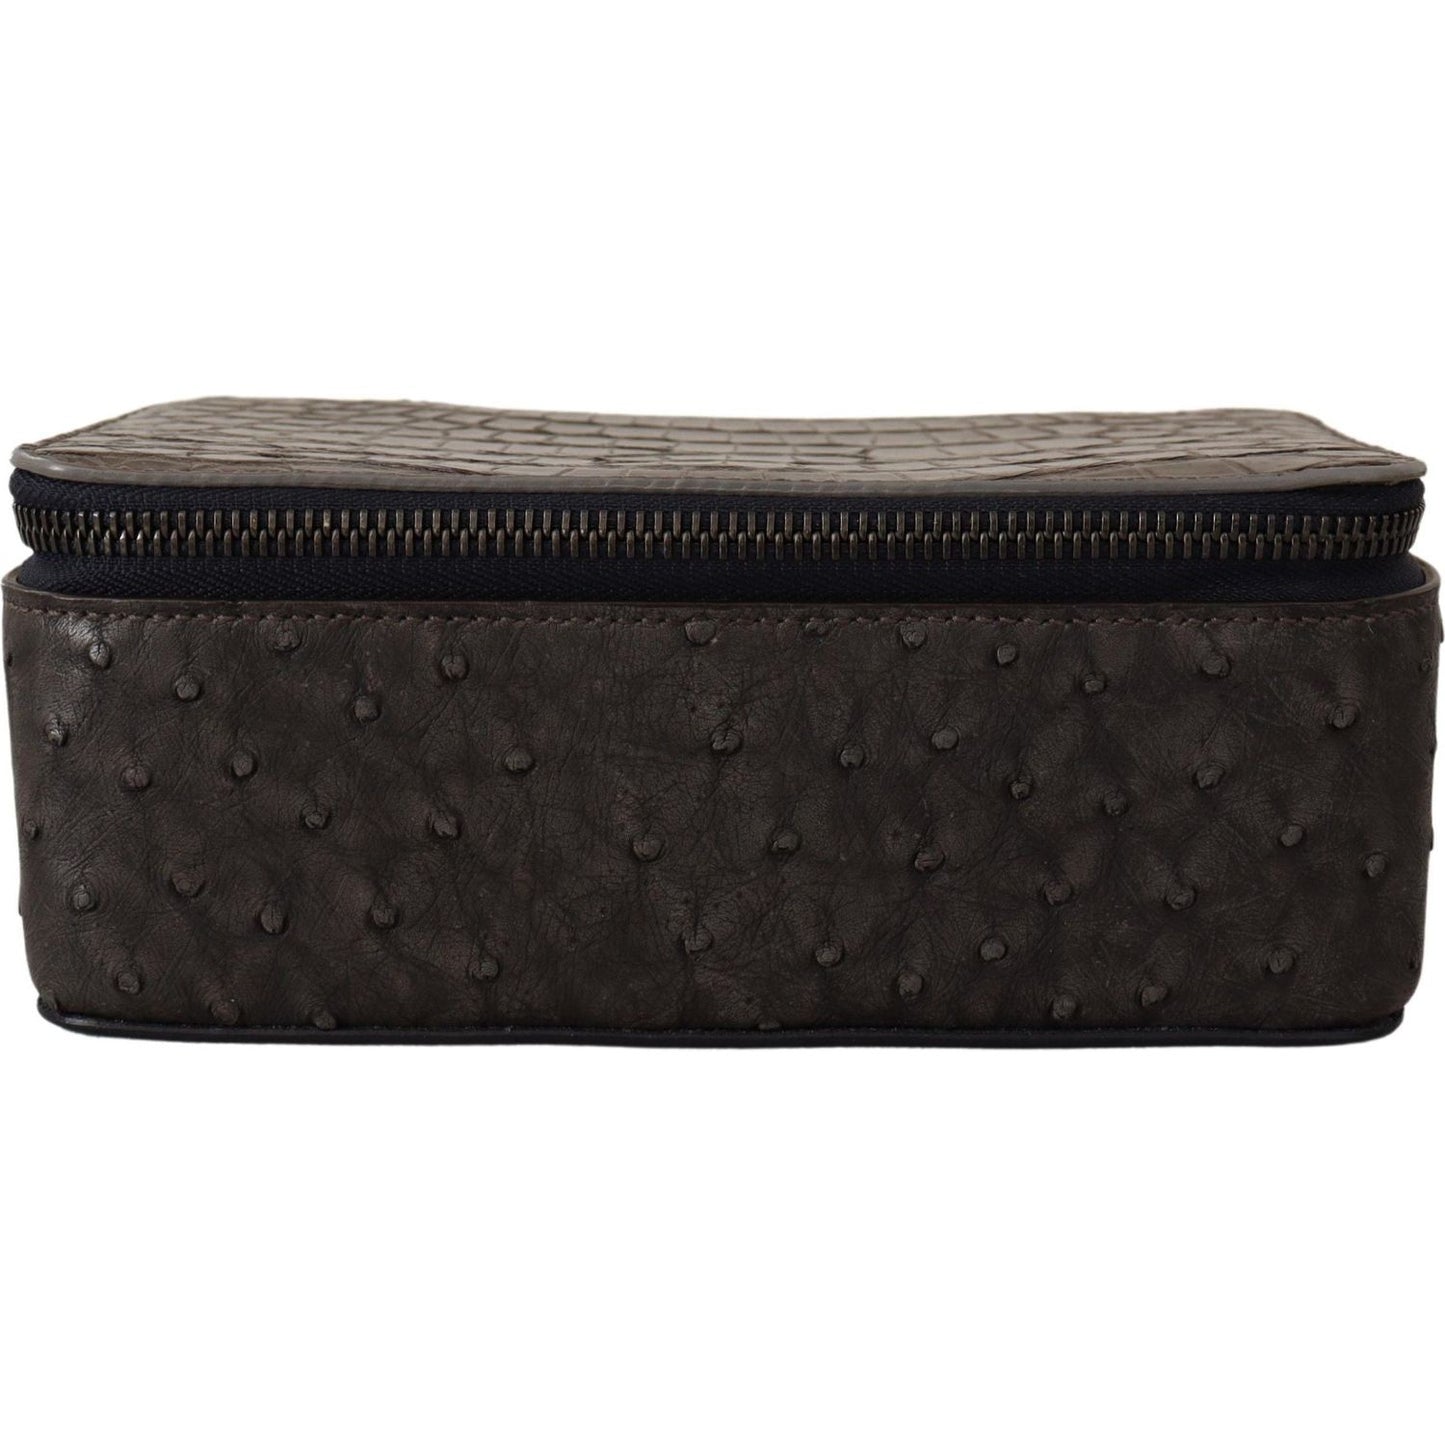 Dolce & Gabbana Exquisite Exotic Skin Vanity Bag gray-skin-leather-vanity-case-toiletry-shaving-bag IMG_6128-0c1812da-e1c.jpg